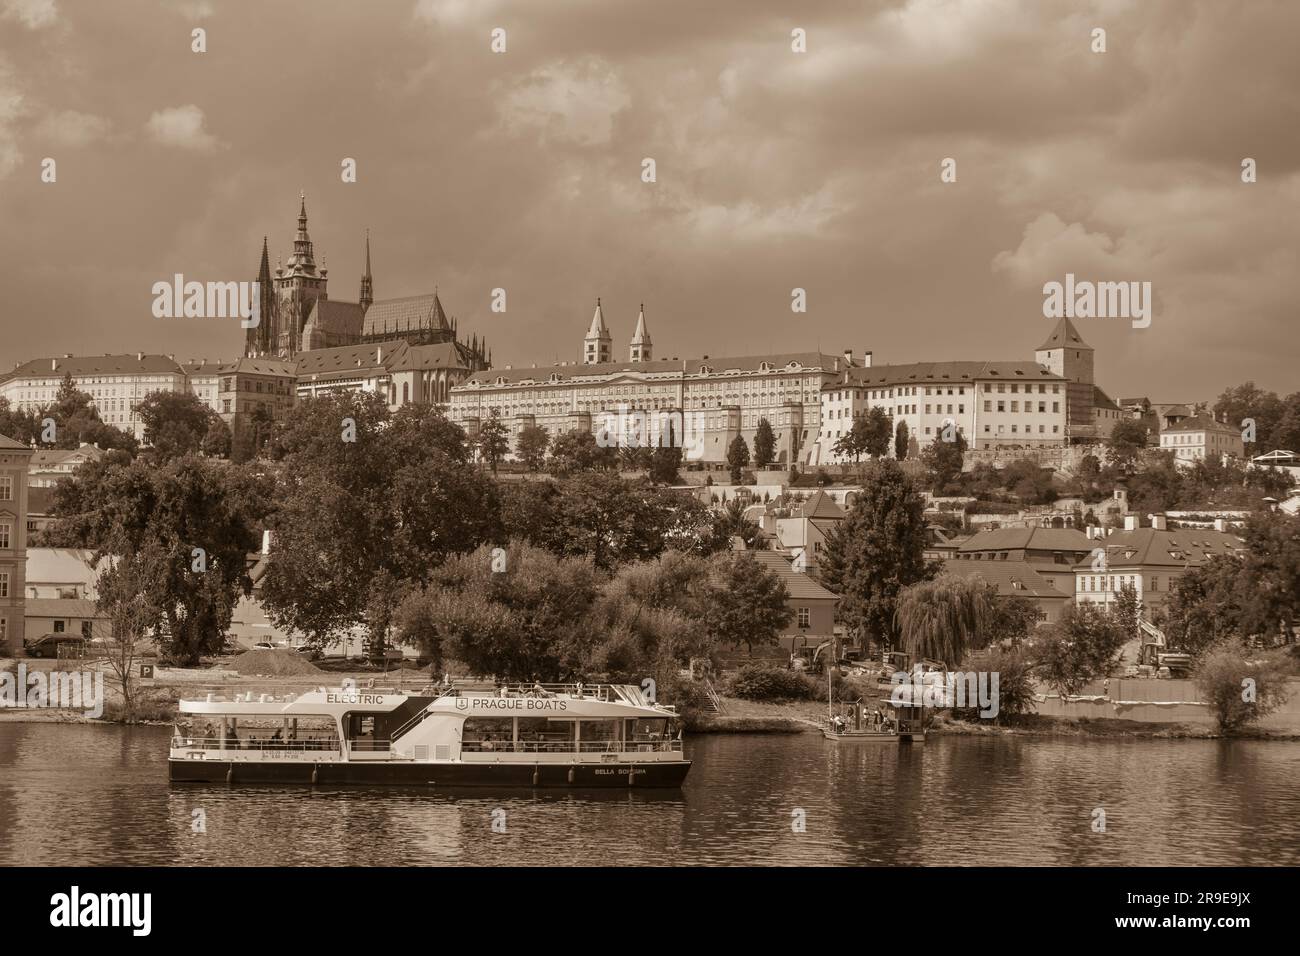 PRAGUE, CZECH REPUBLIC, EUROPE - Boat cruise on Vltava River. St Vitus Cathedral, above left, and Prague Castle. Stock Photo